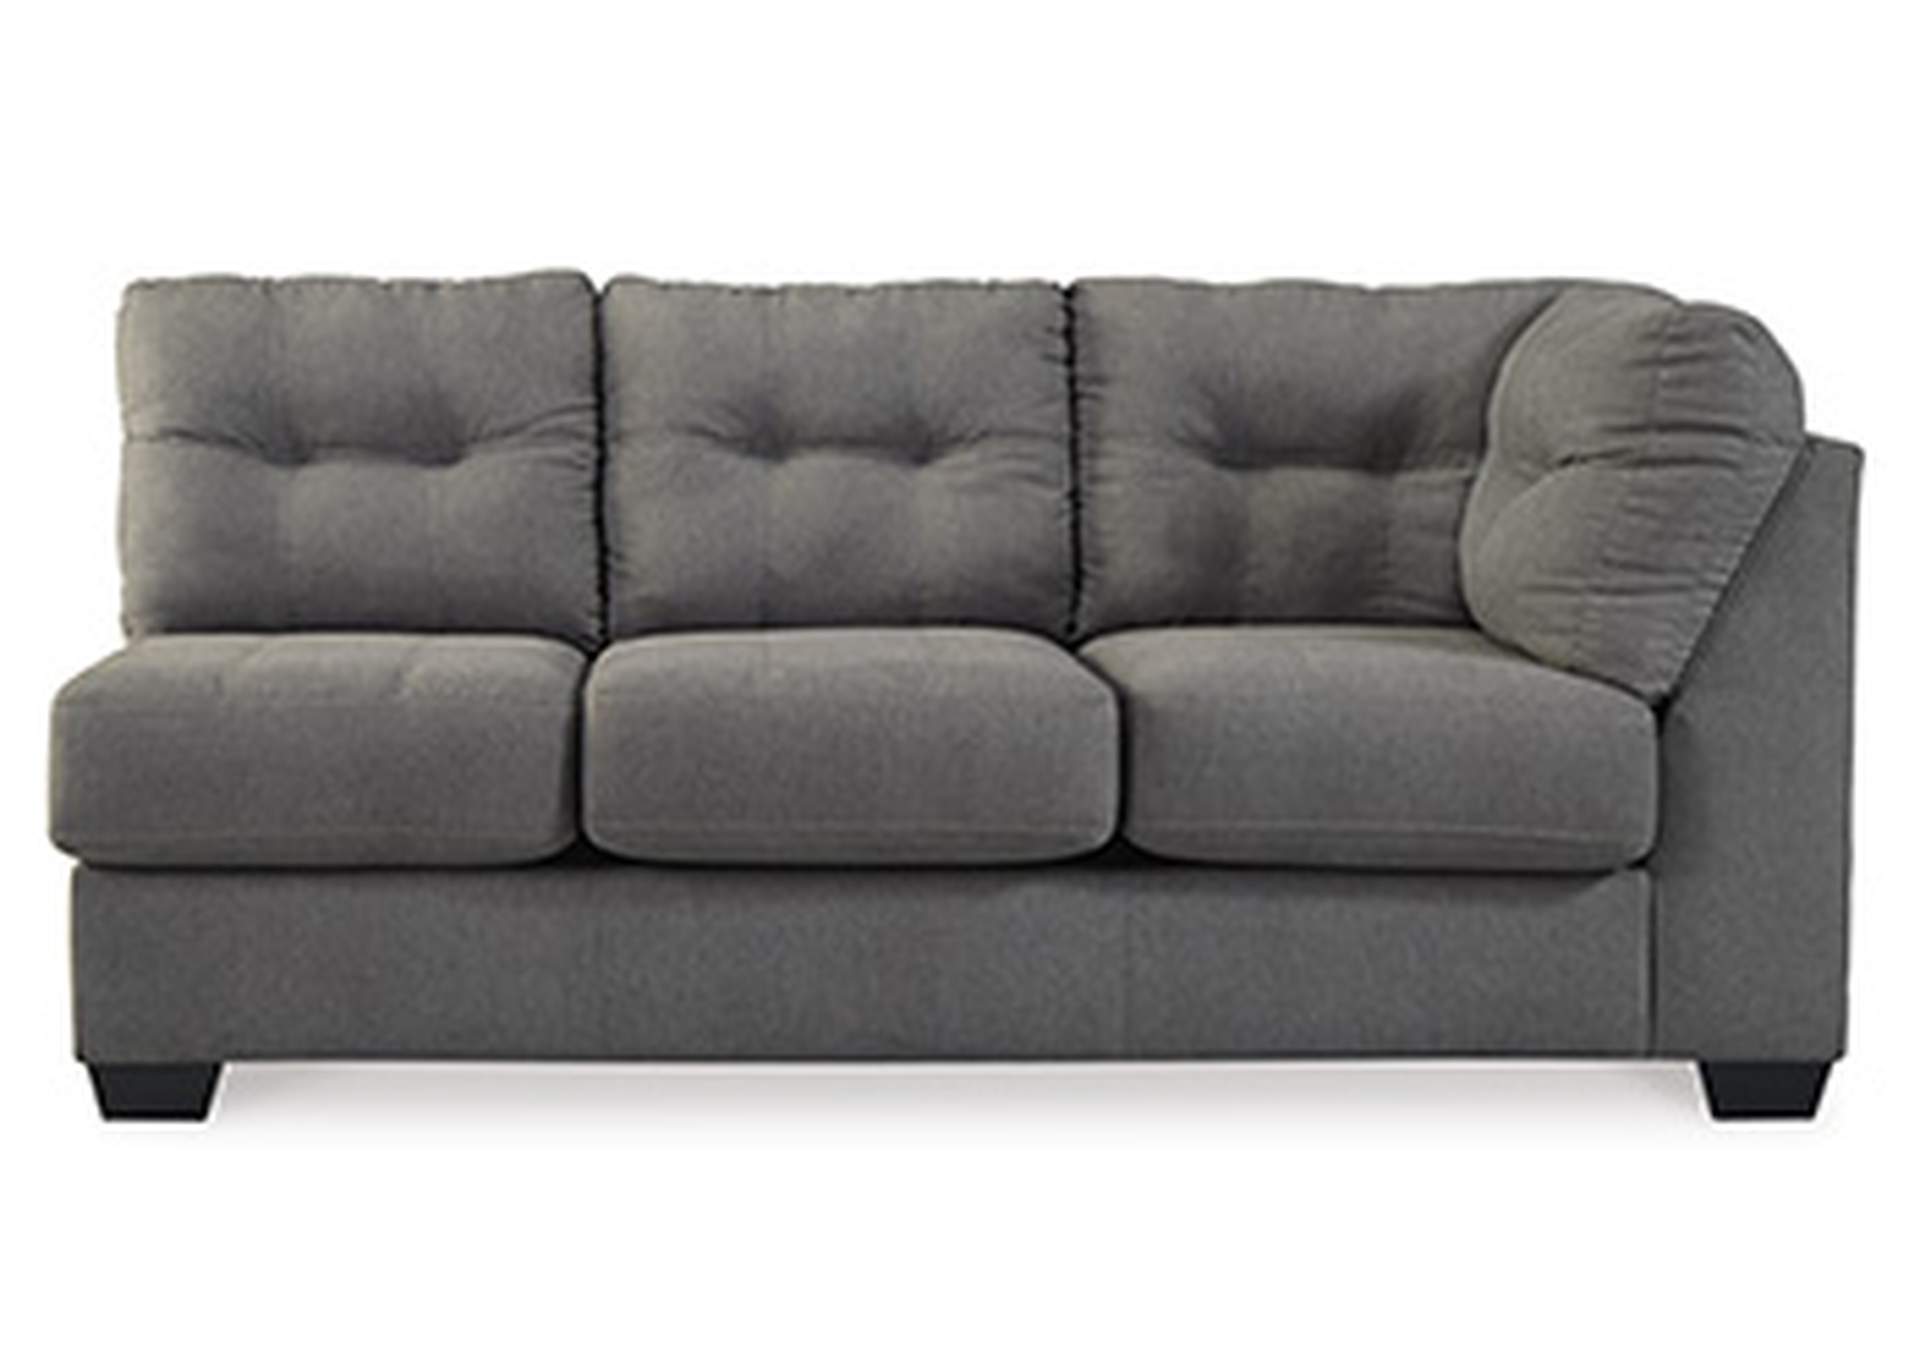 Maier Right-Arm Facing Sofa,Benchcraft